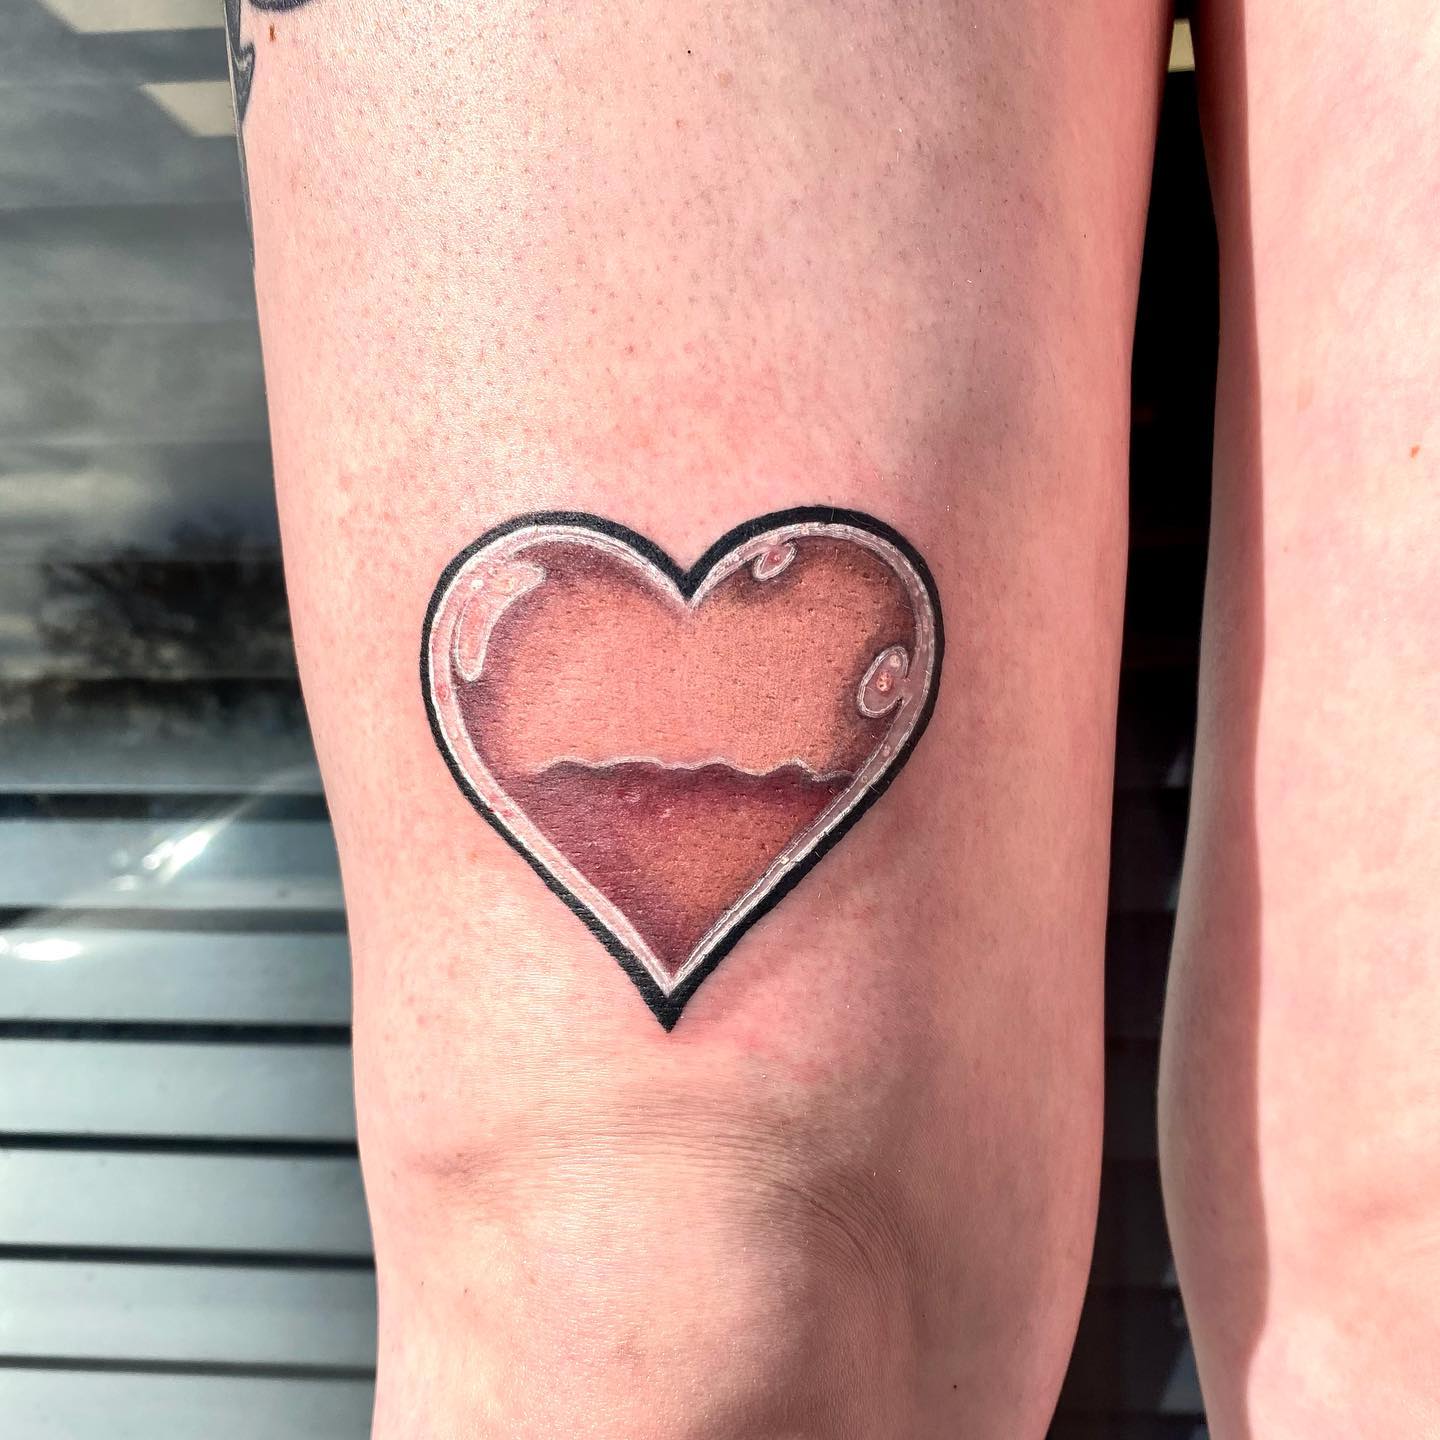 Tatuaje de corazón por encima de la rodilla